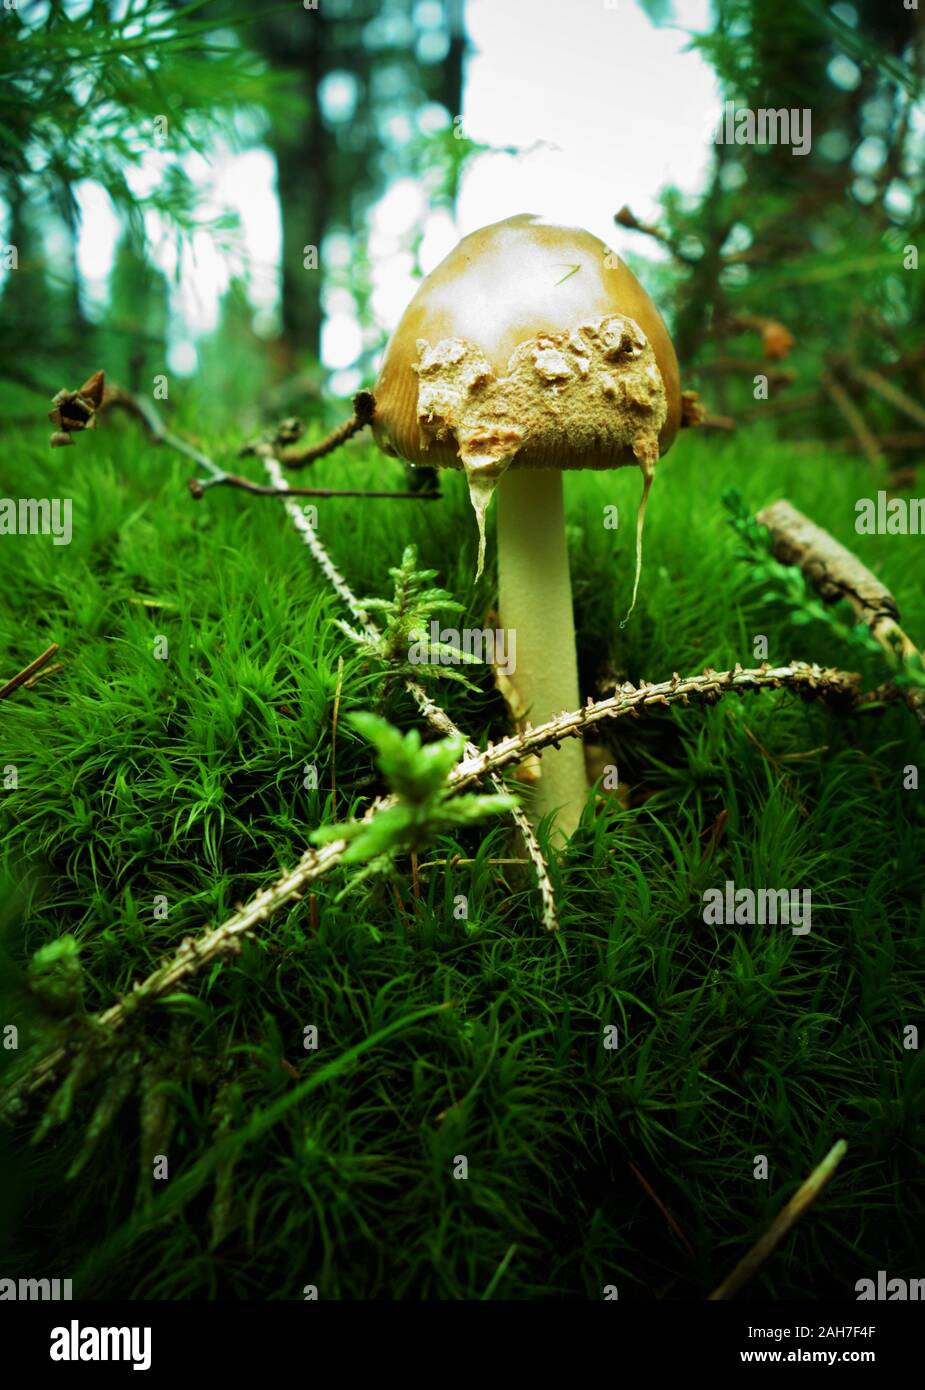 Mushroom with brown cap and white stem Stock Photo - Alamy